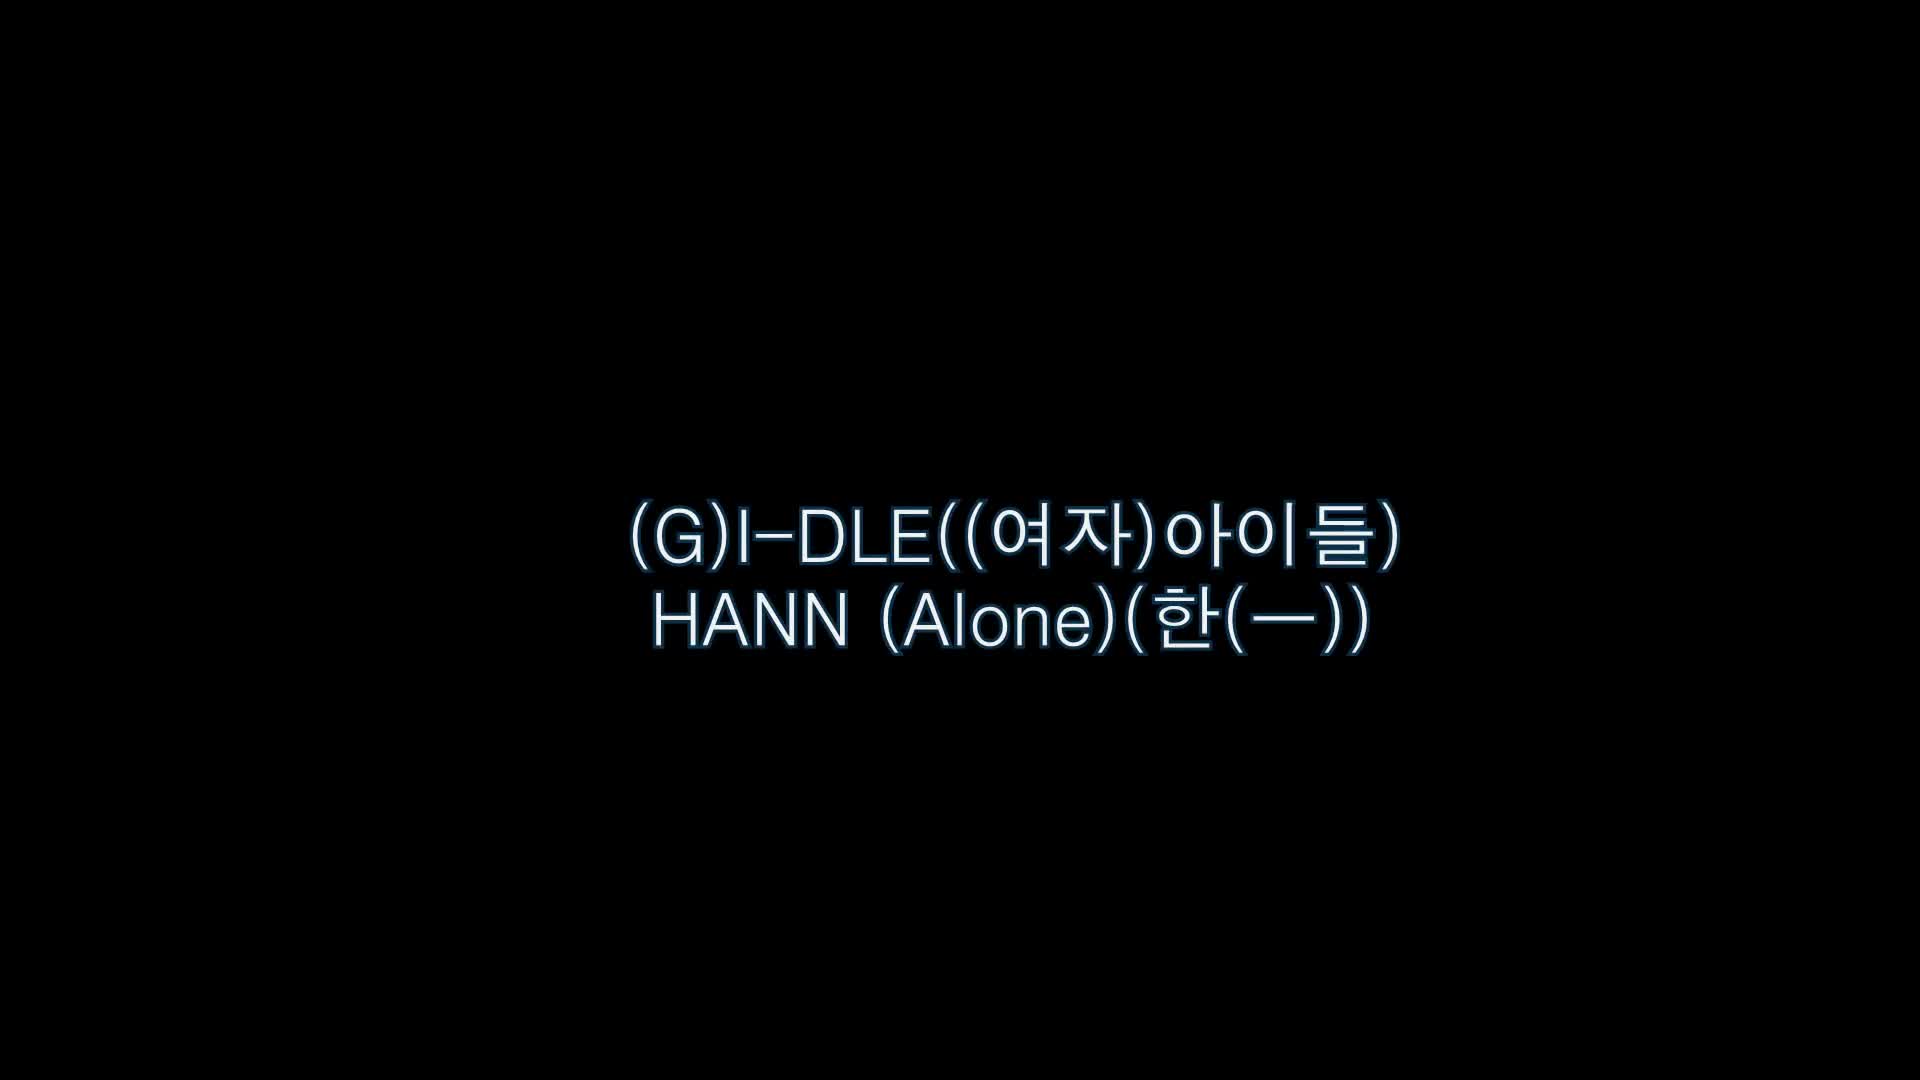 (G)I-DLE((여자)아이들) HANN (Alone)(한(一))cover dance  WAVEYA